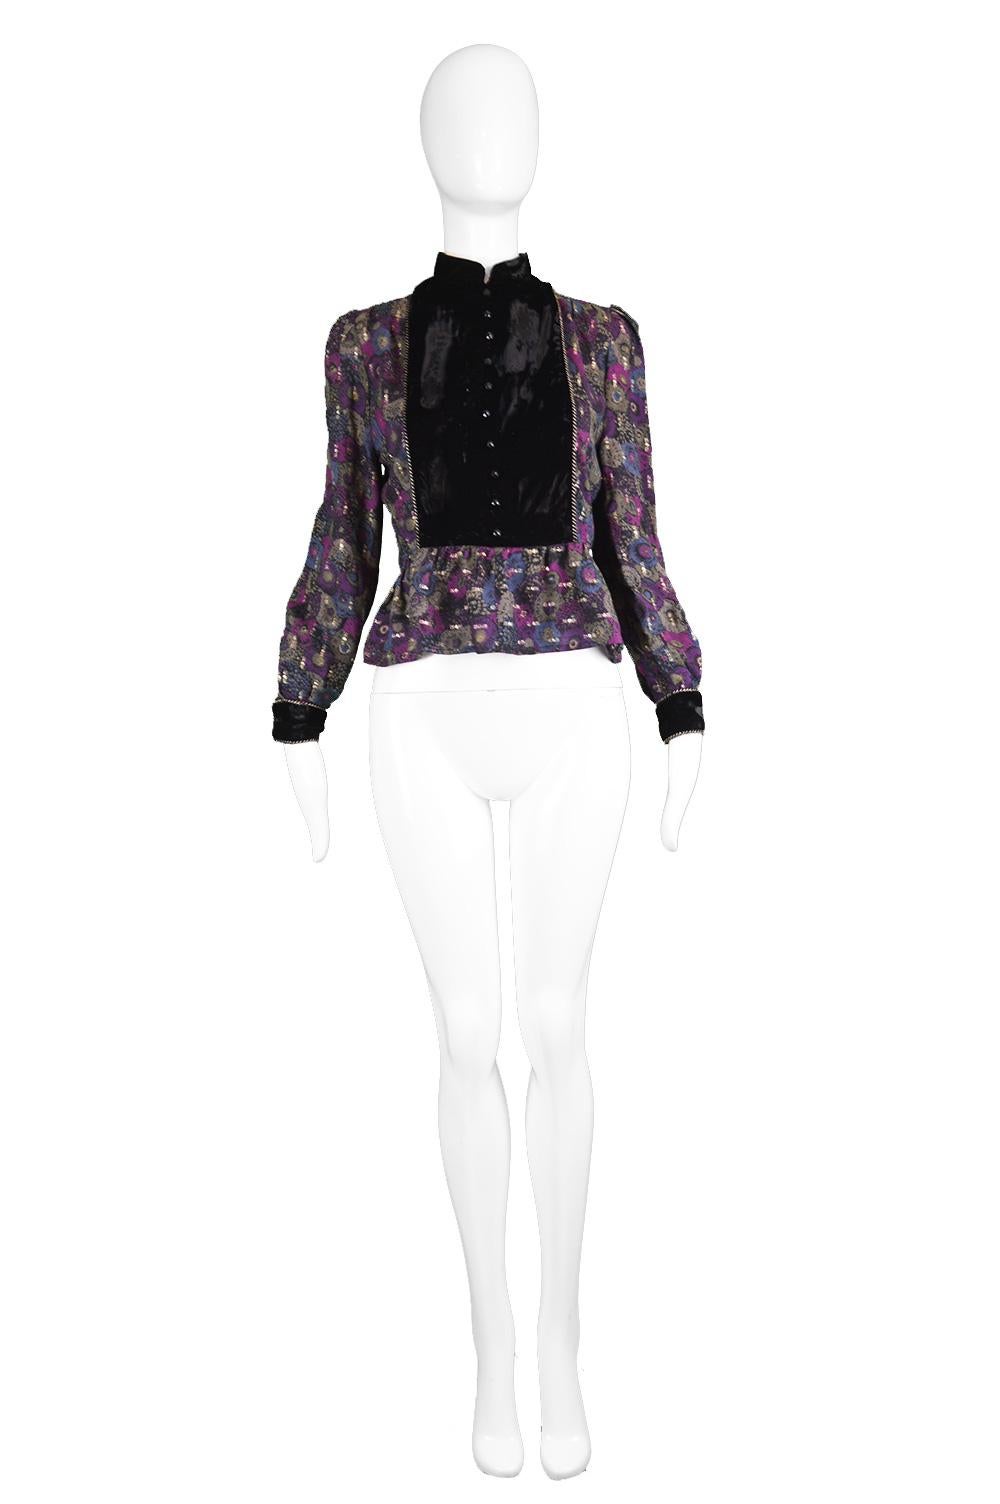 Nina Ricci Boutique Vintage Women's Silk Velvet, Wool & Lamé Shirt, 1970s

Estimated Size: fits roughly like a UK 12/ US 8/ EU 40. Please check all measurements below by clicking 'CONTINUE READING'
Bust - 36” / 91cm
Waist - 30” / 76cm
Length